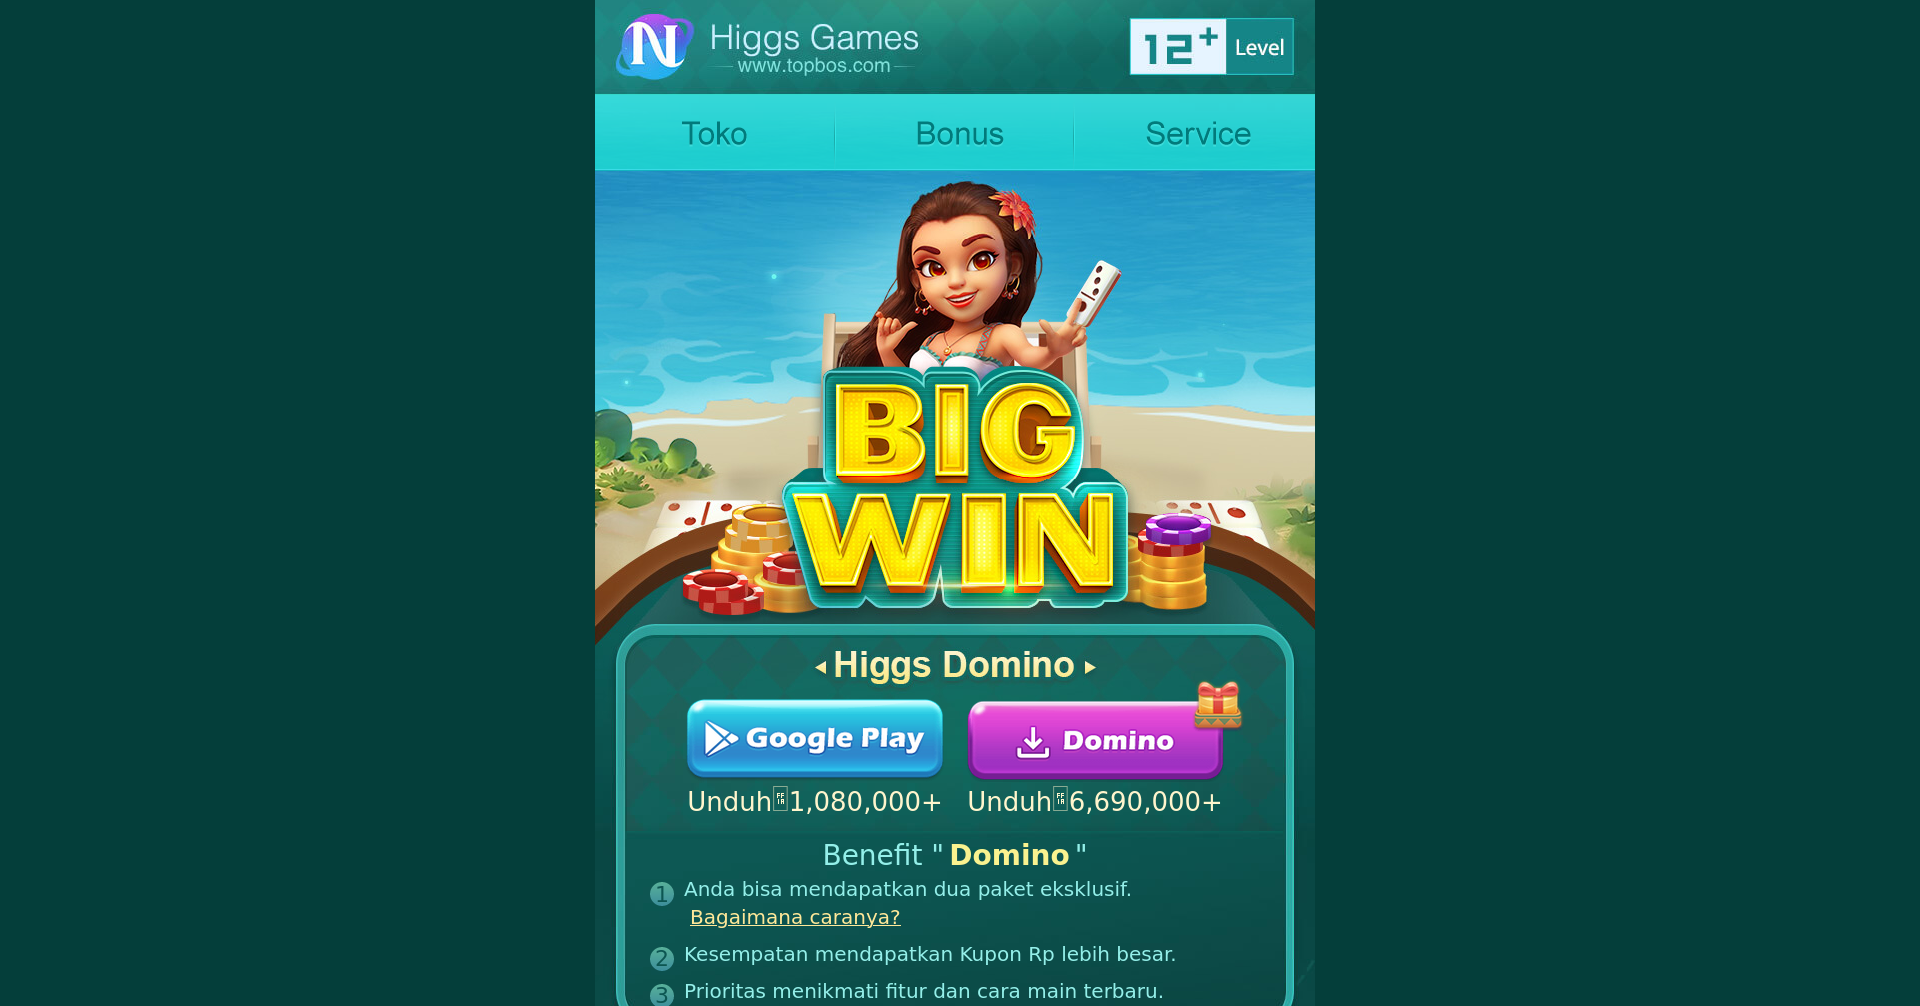 Trade.topbos.com higgs domino